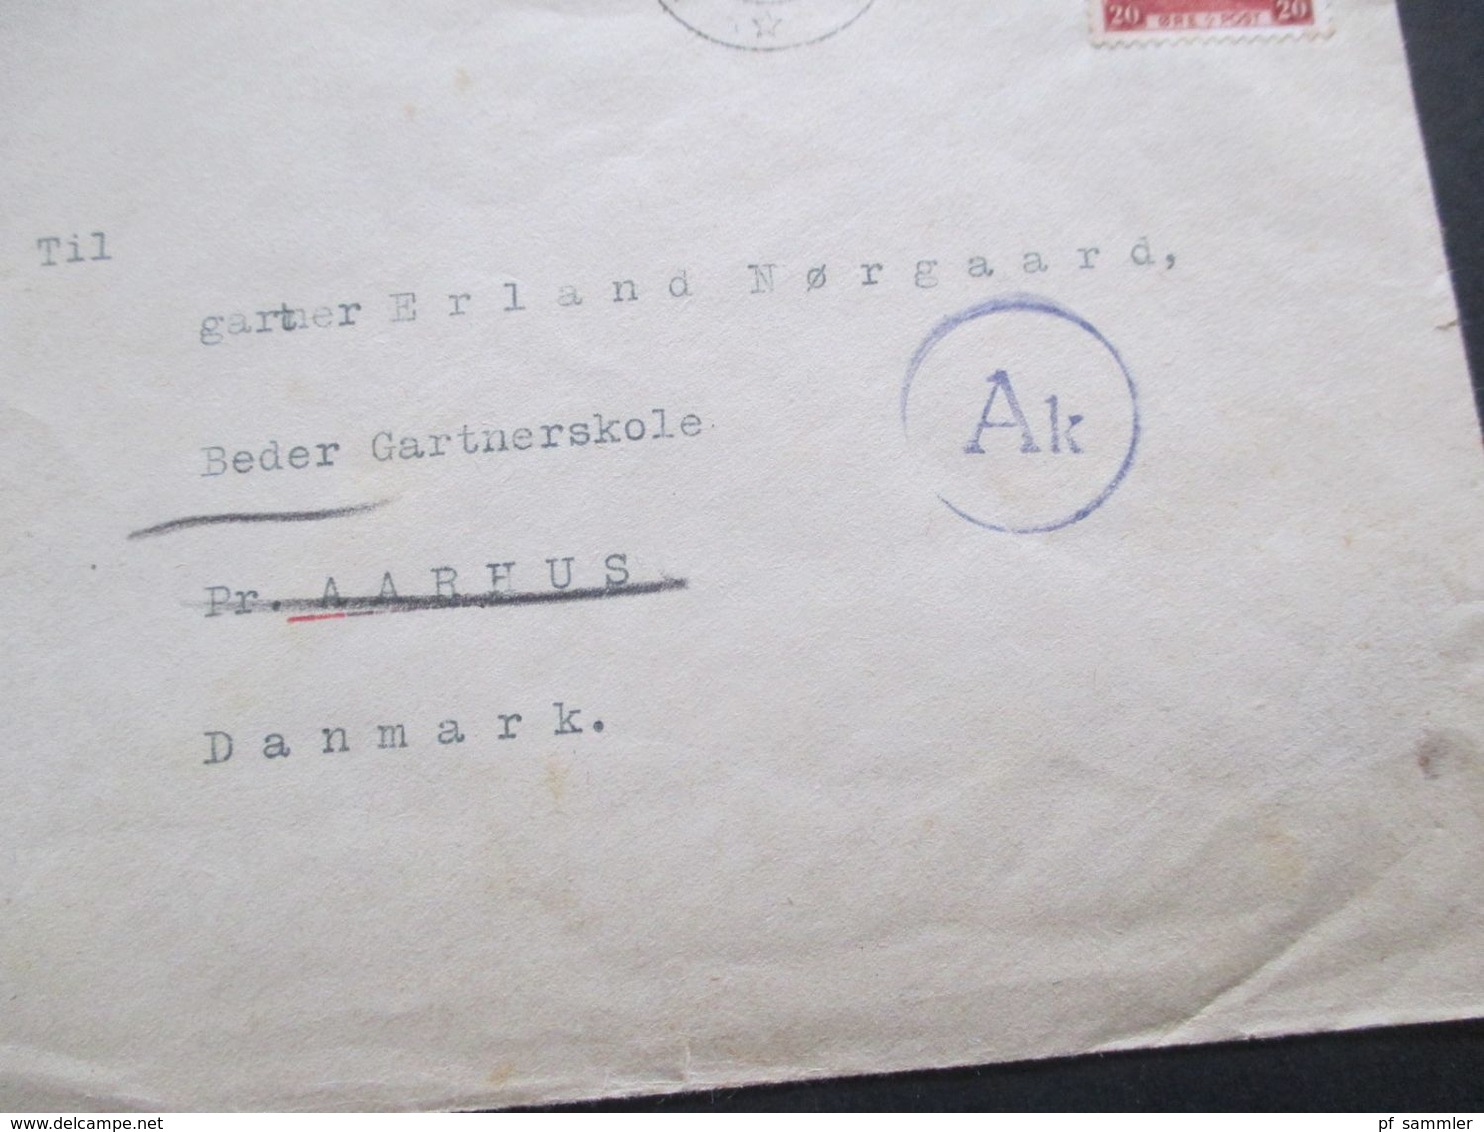 Dänemark 1941 Brief Stempel Landbrukshogskolen Ias Innerhalb Dänemarks Mit OKW Zensur / Zensurstereifen + Stempel - Storia Postale